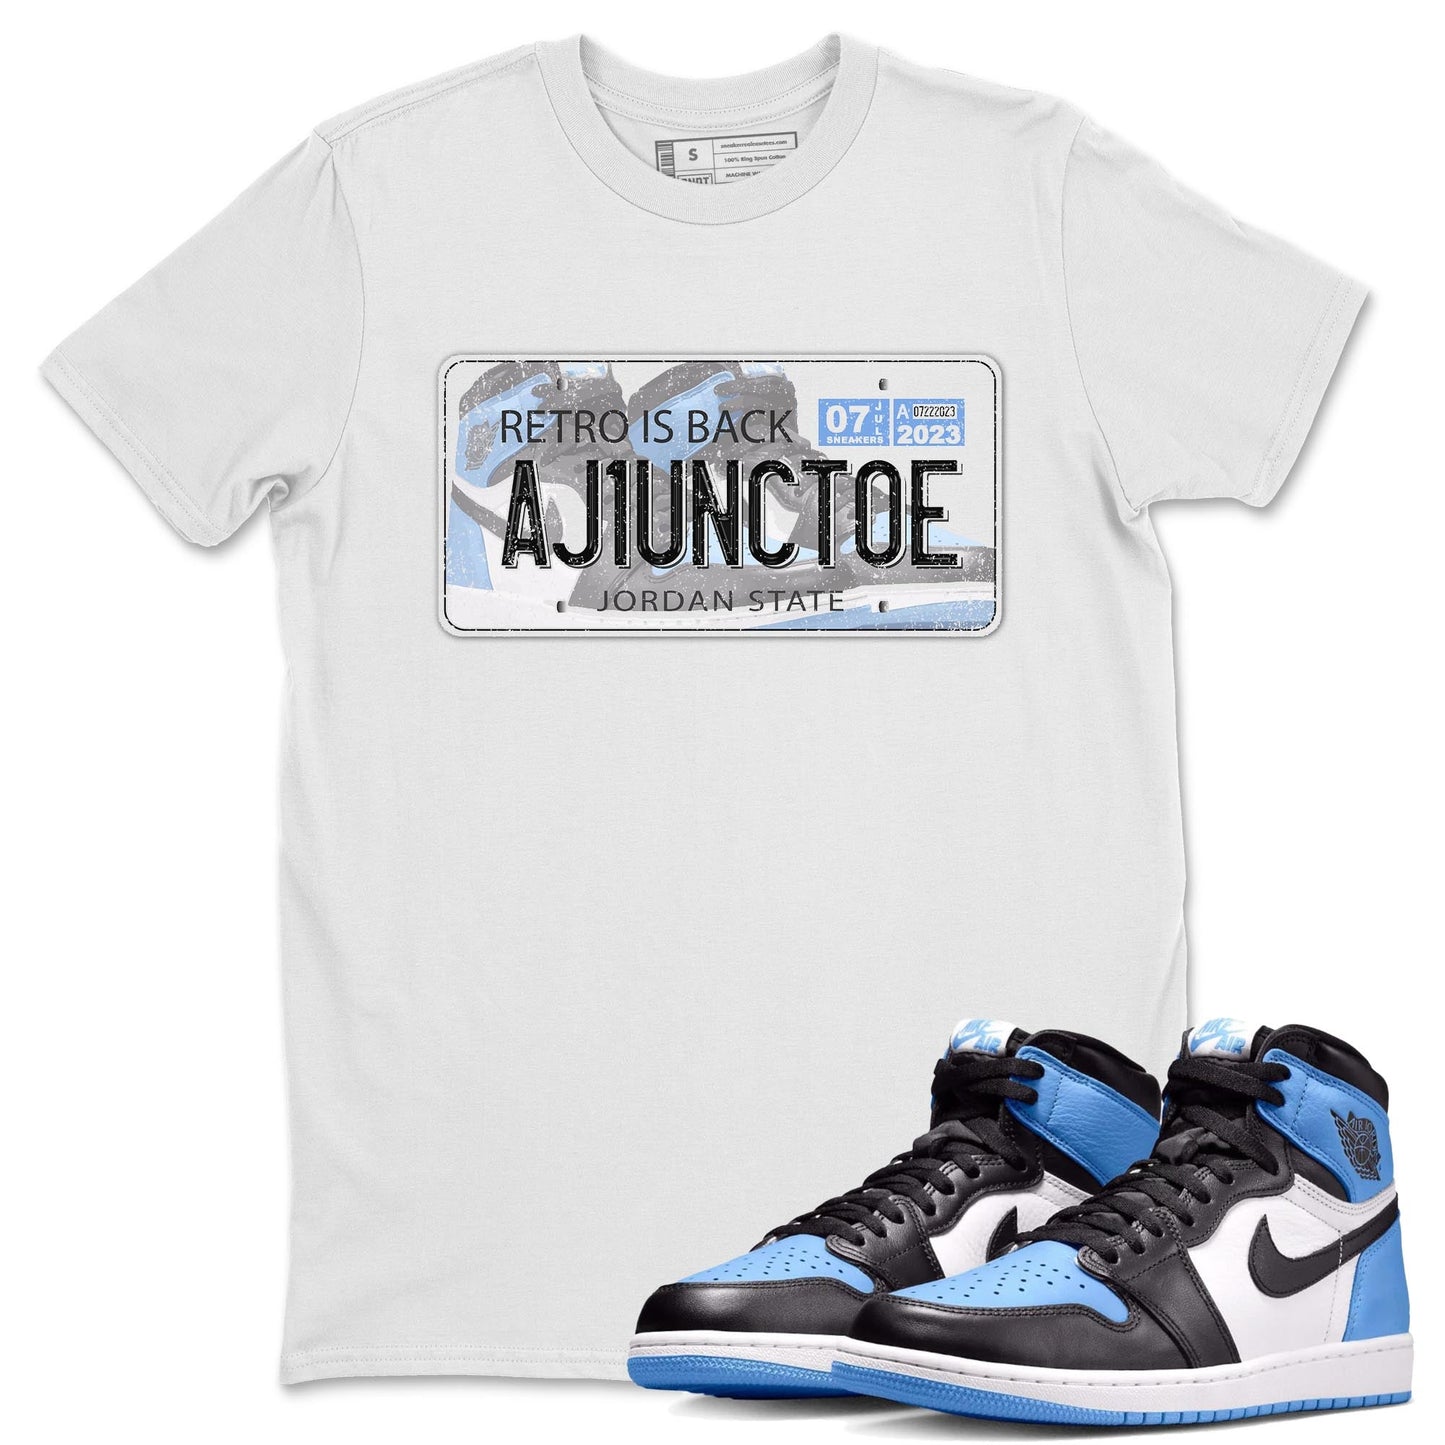 Air Jordan 1 Retro High OG University Blue shirt to match jordans Jordan Plate Streetwear Sneaker Shirt Air Jordan 1 UNC Toe Drip Gear Zone Sneaker Matching Clothing Unisex White 1 T-Shirt